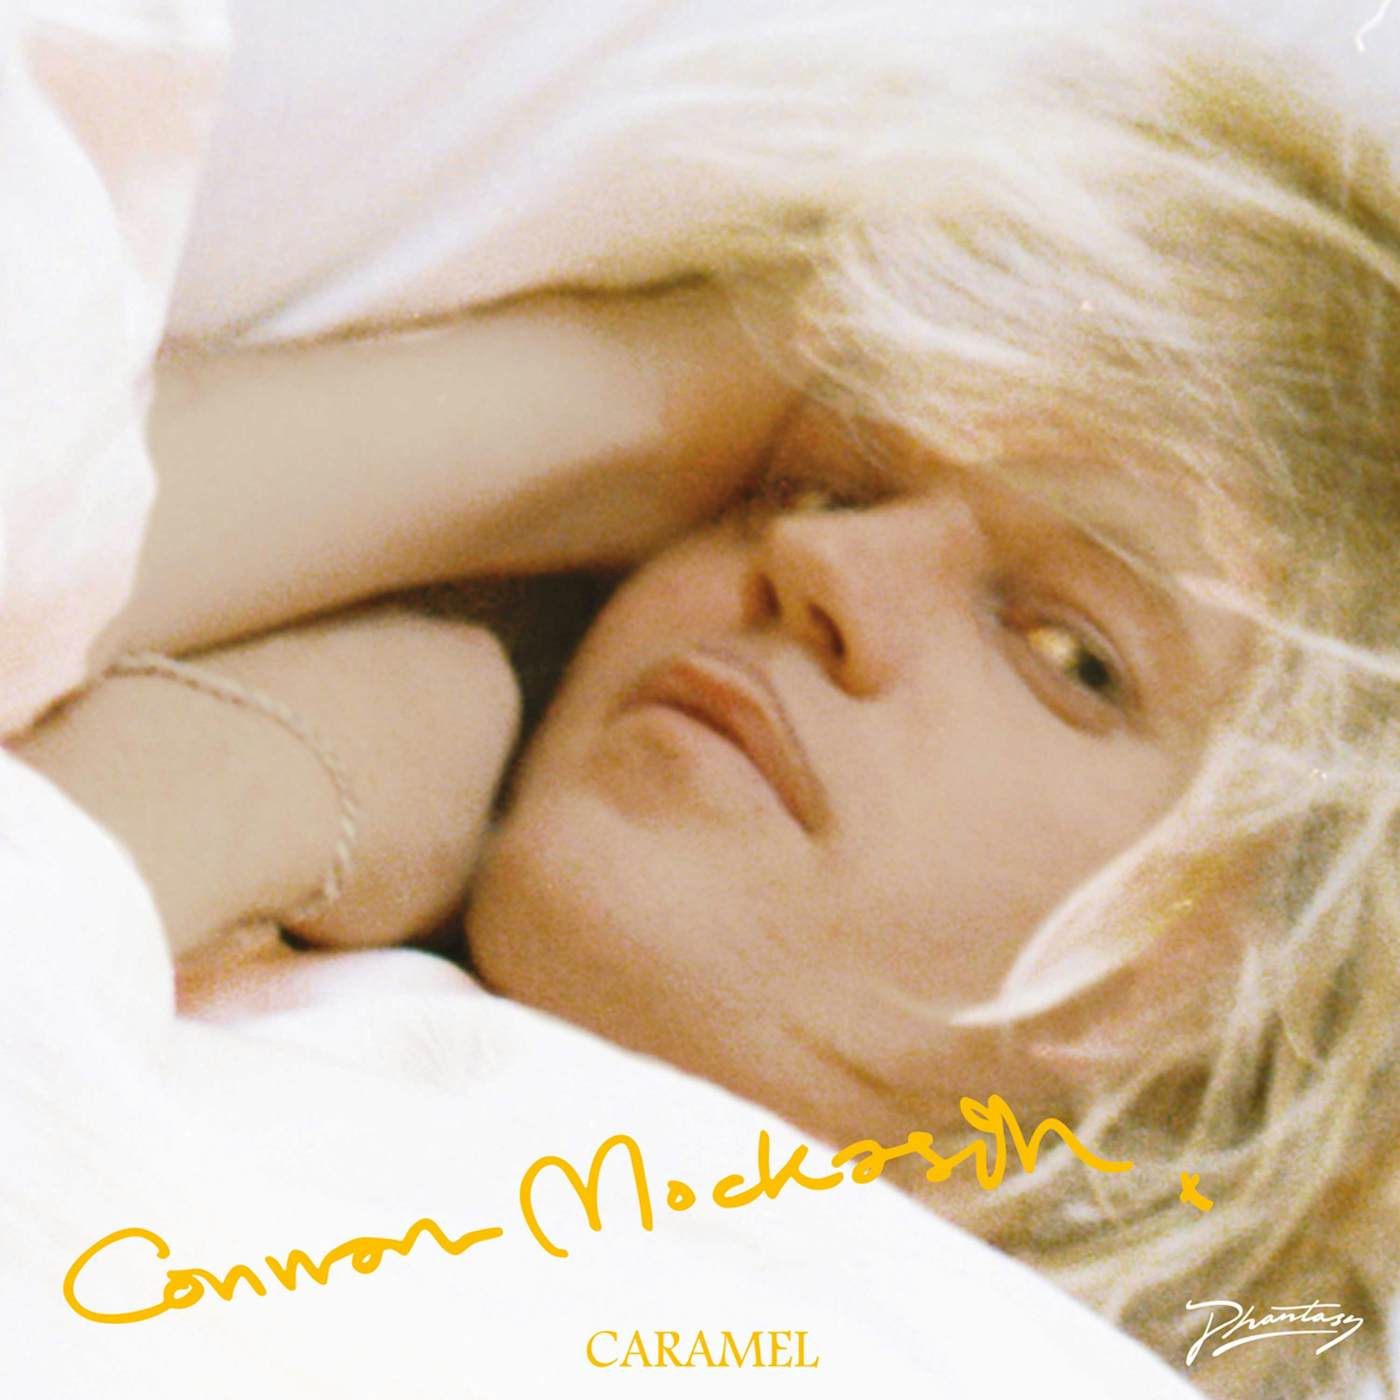 Connan Mockasin CARAMEL CD